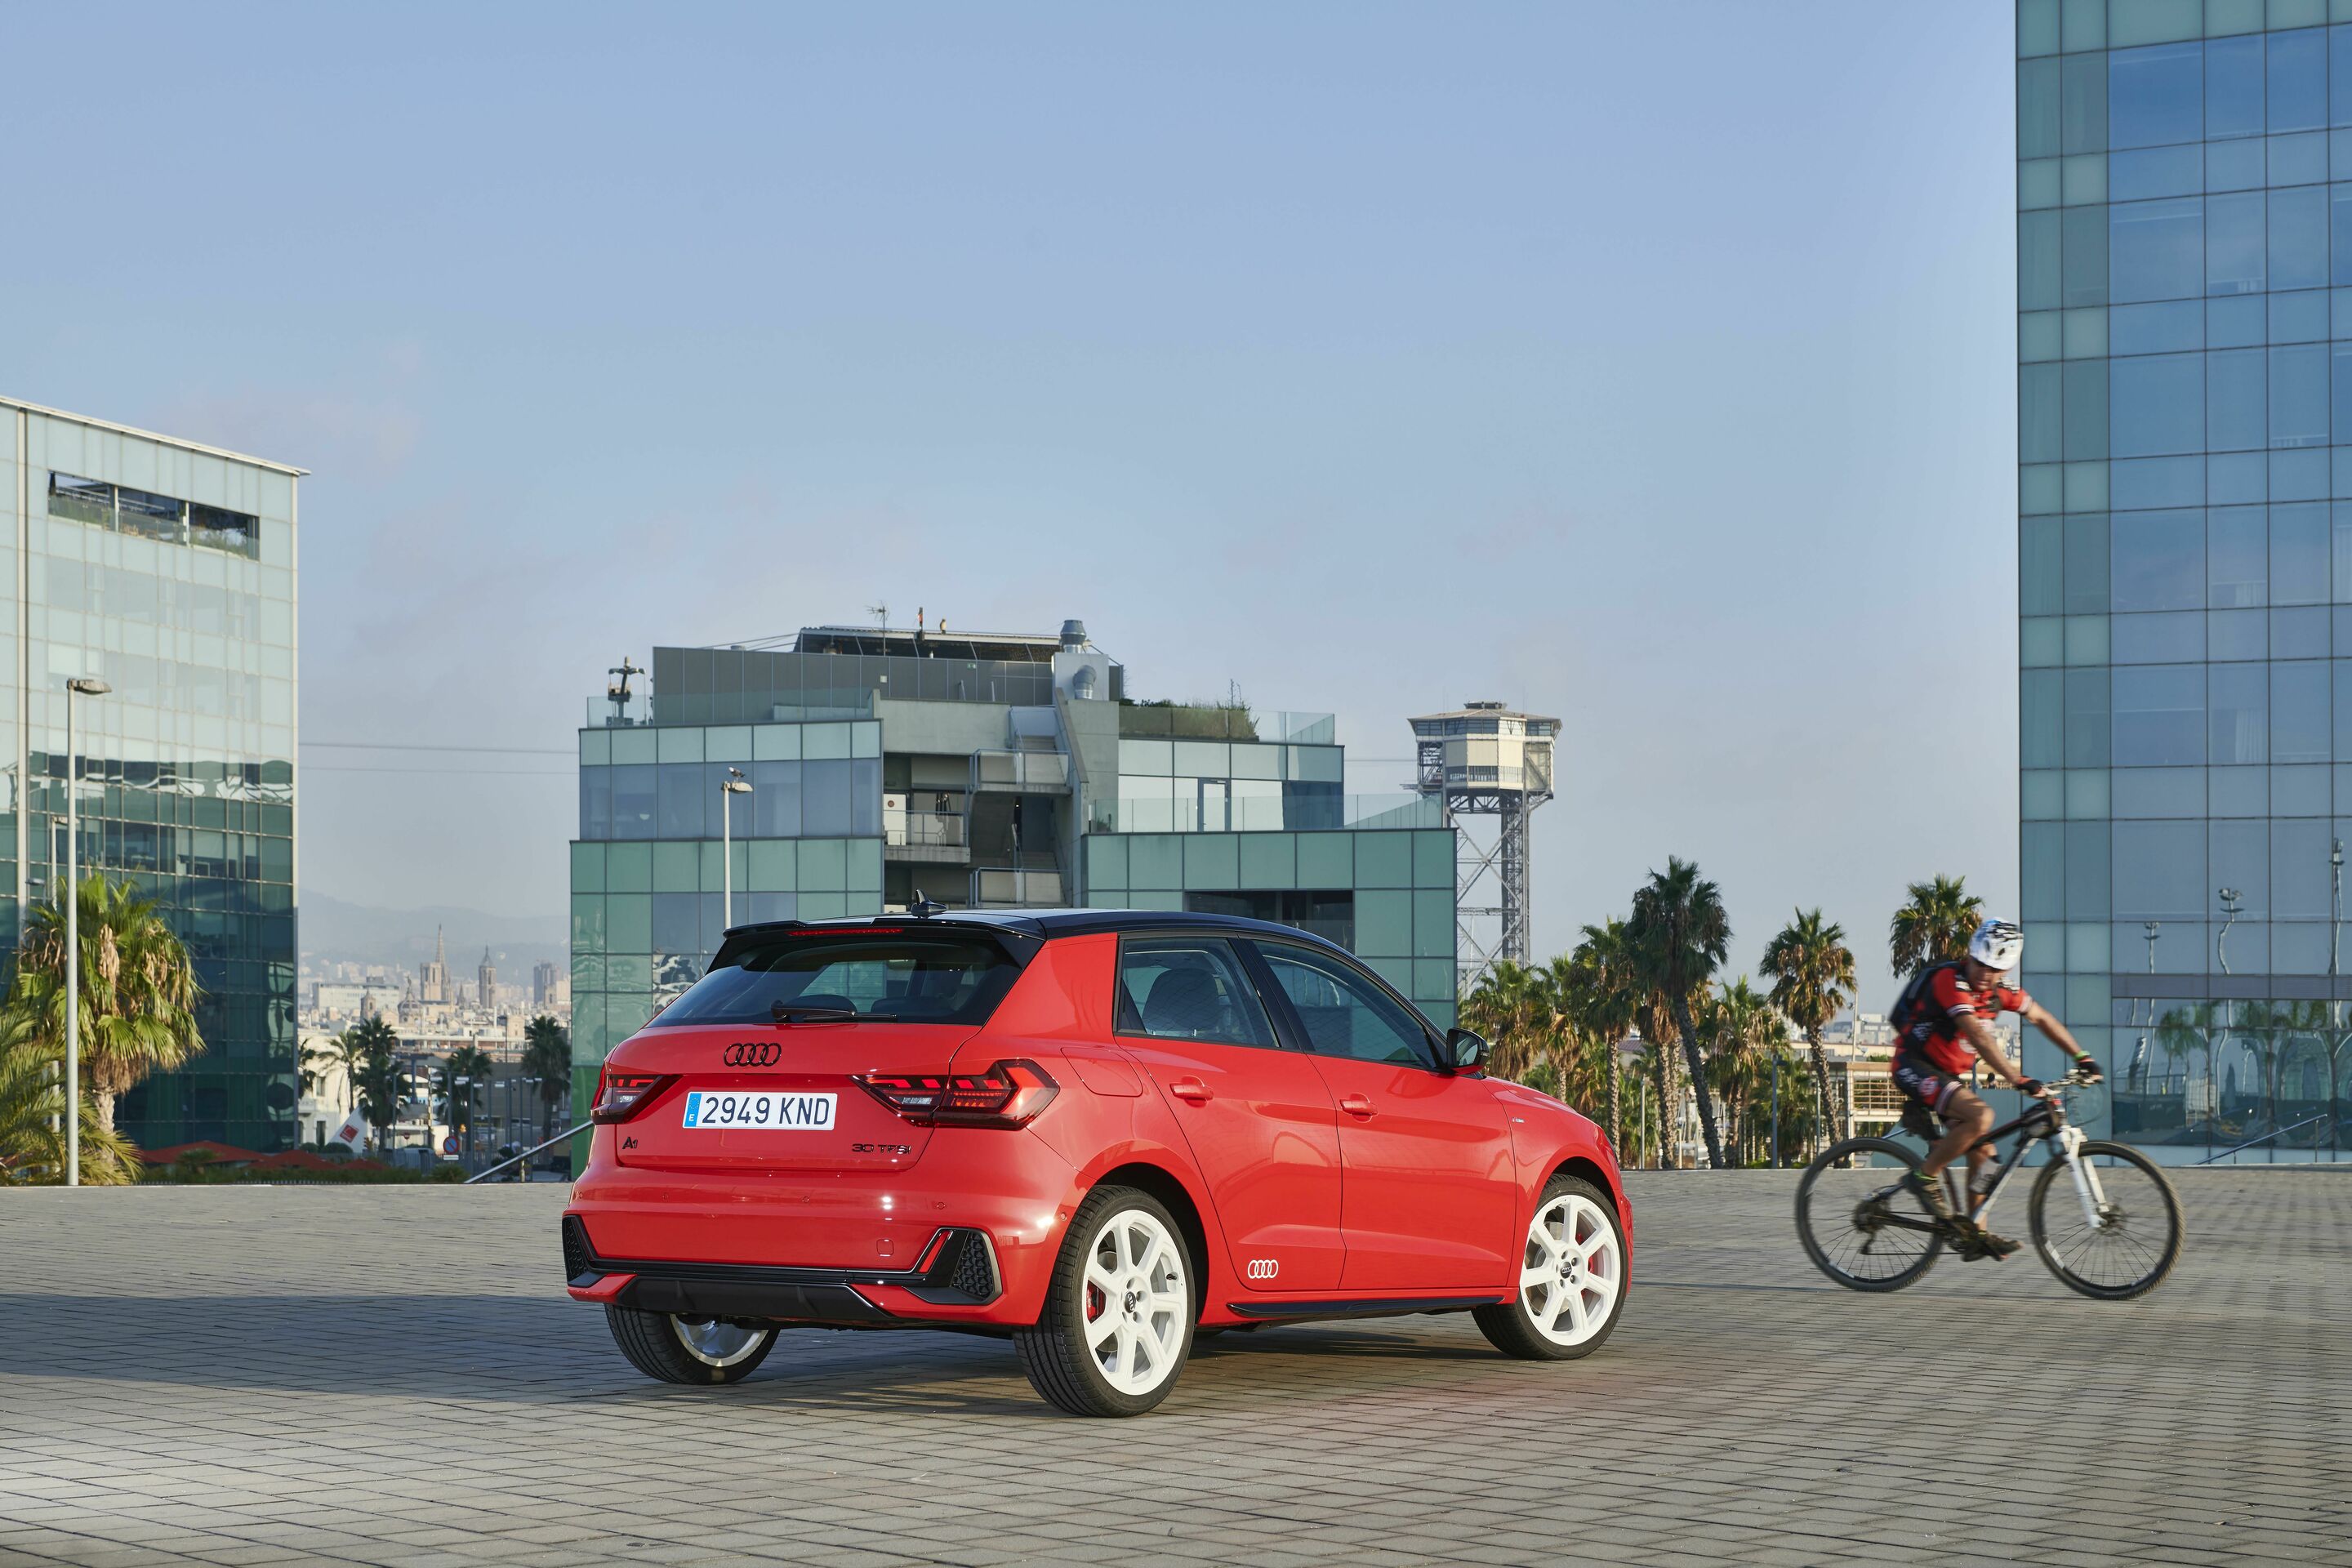 Audi A1 Sportback in Barcelona, Port Vell